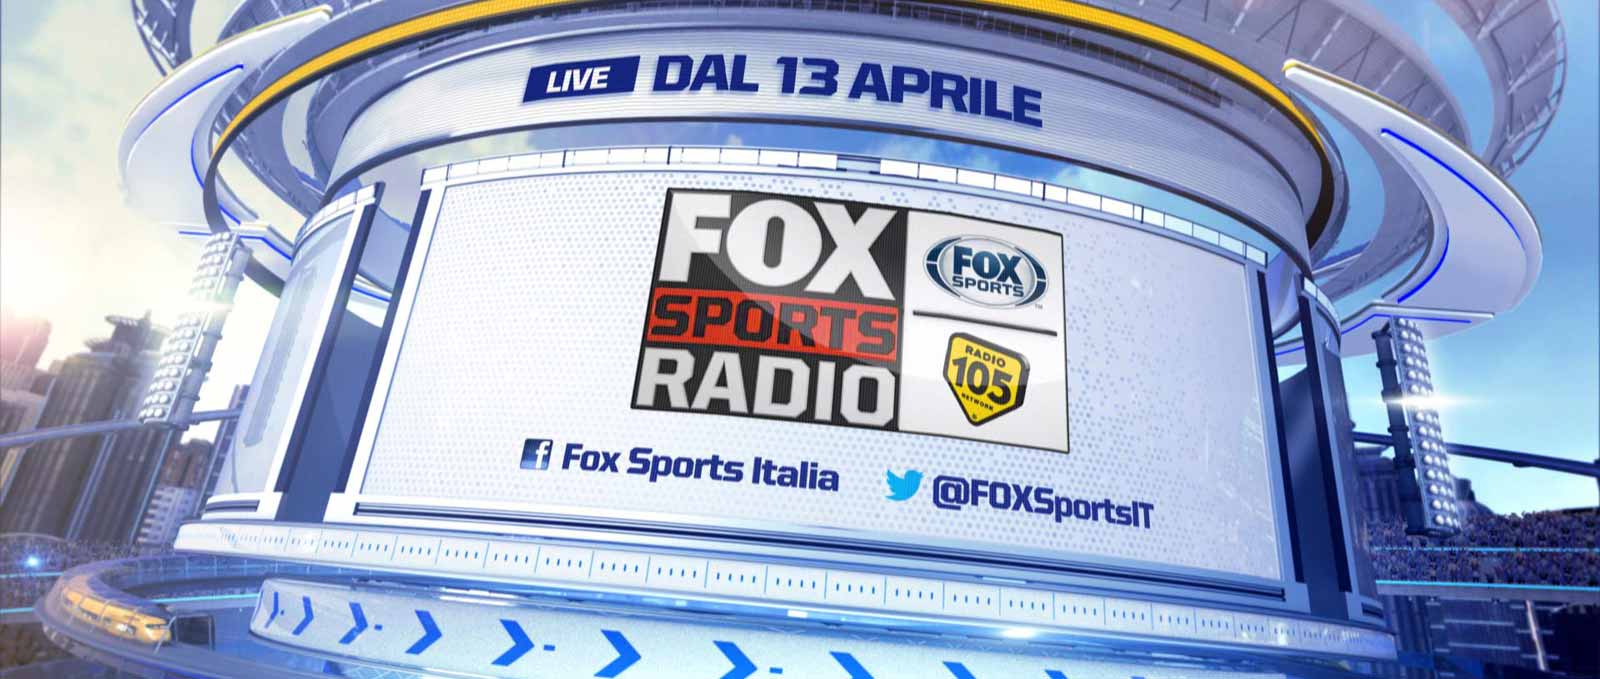 Fox Sports Radio 105